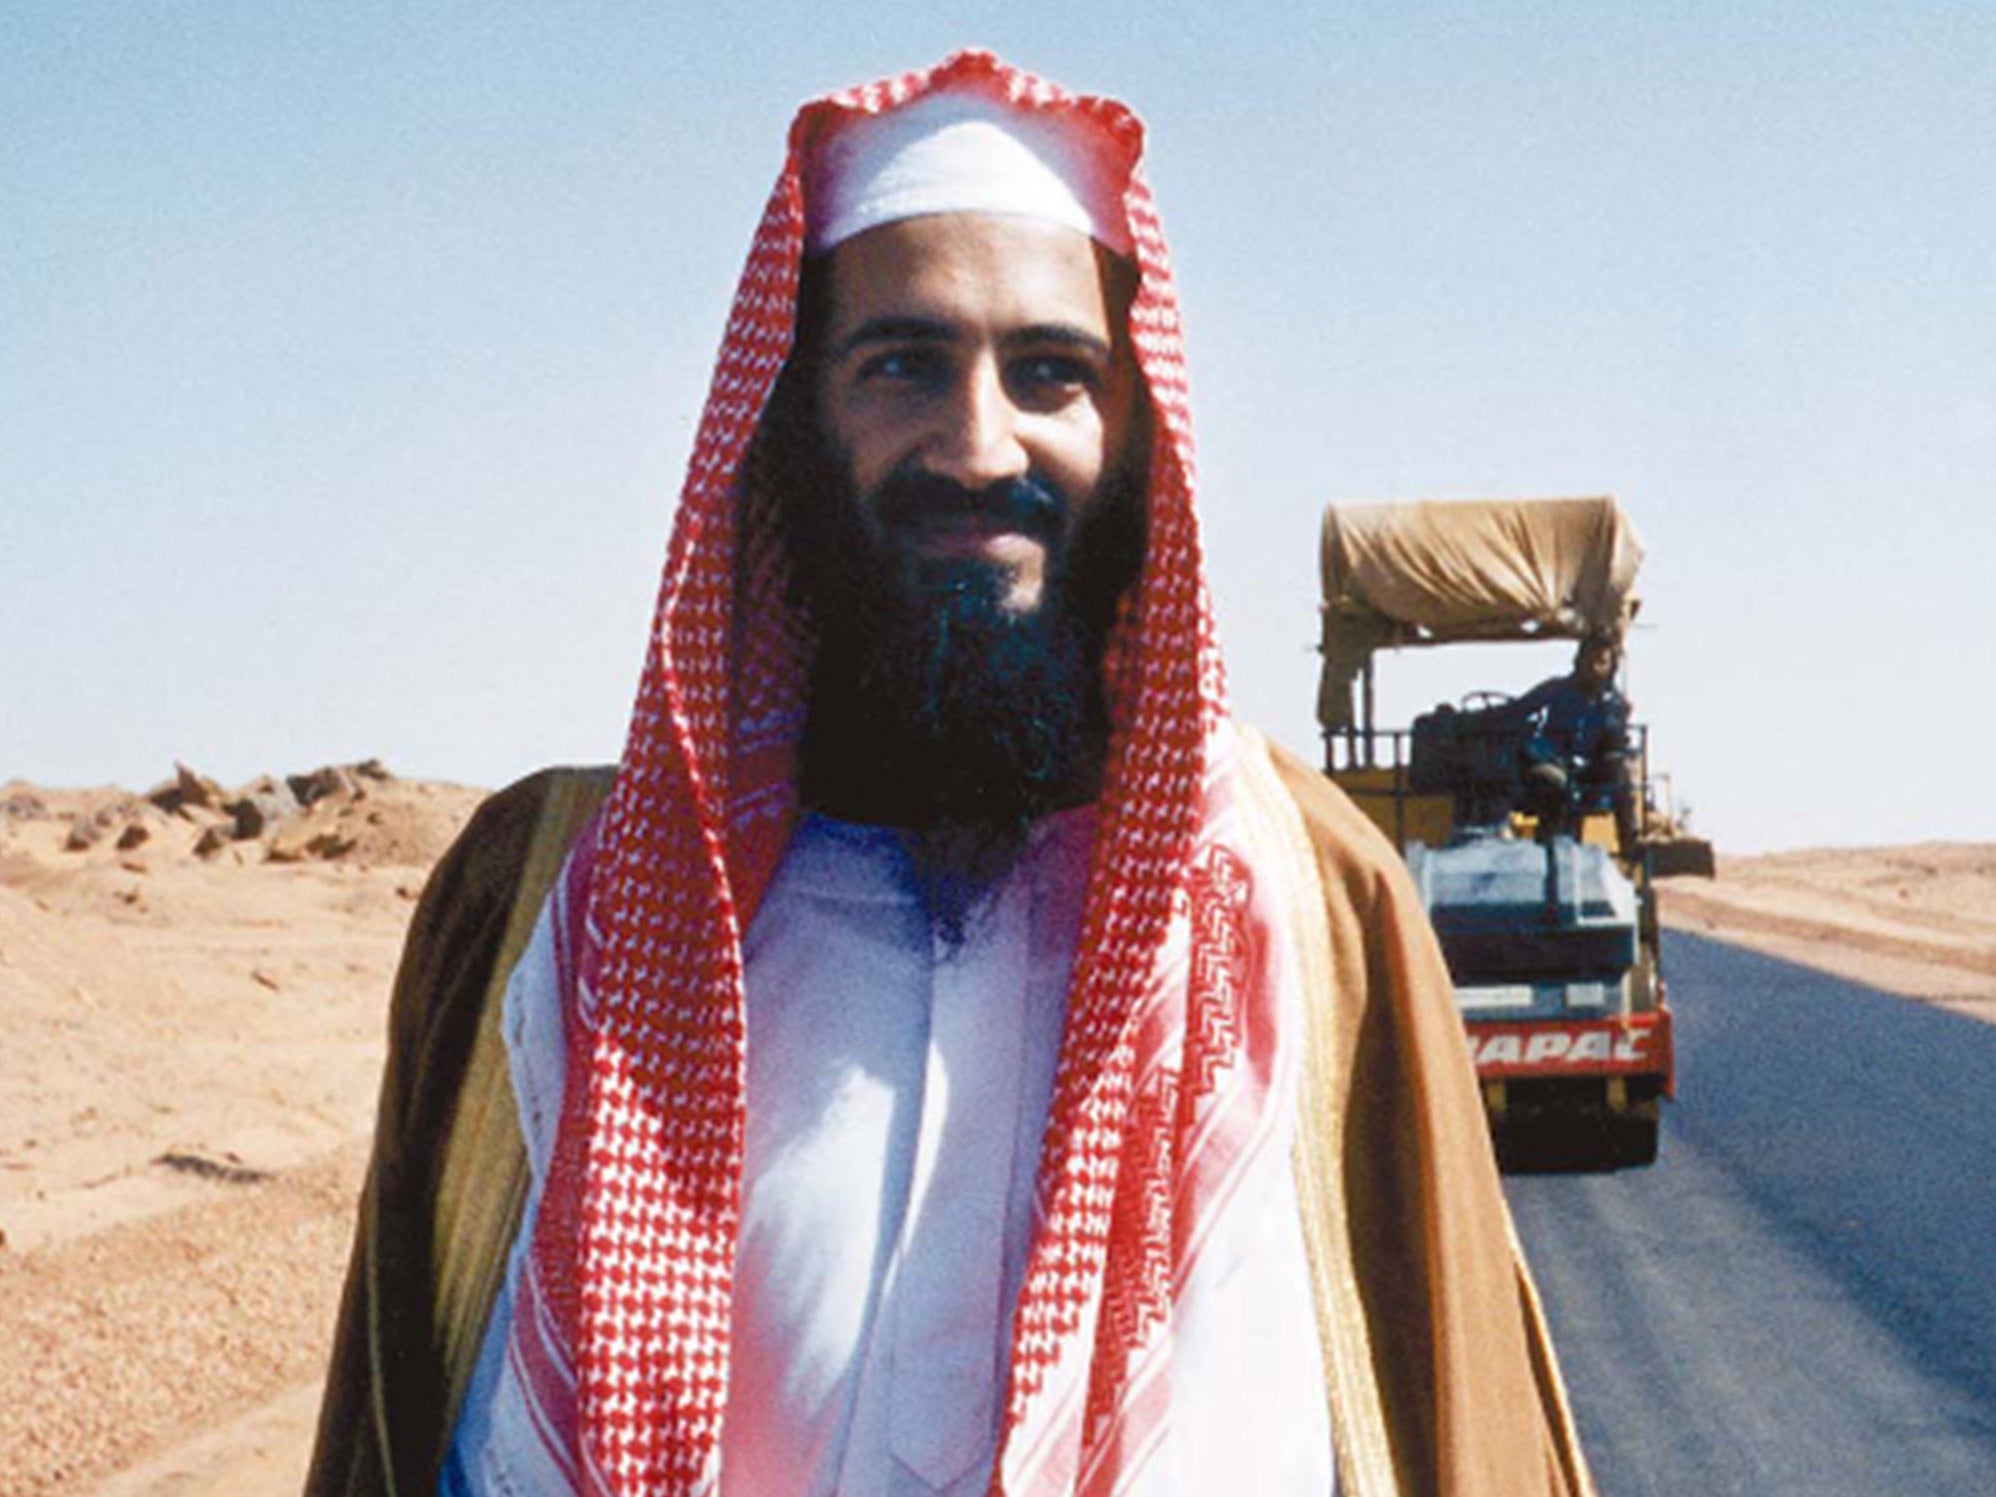 Bin Laden poses by his new desert road, Sudan, 1993